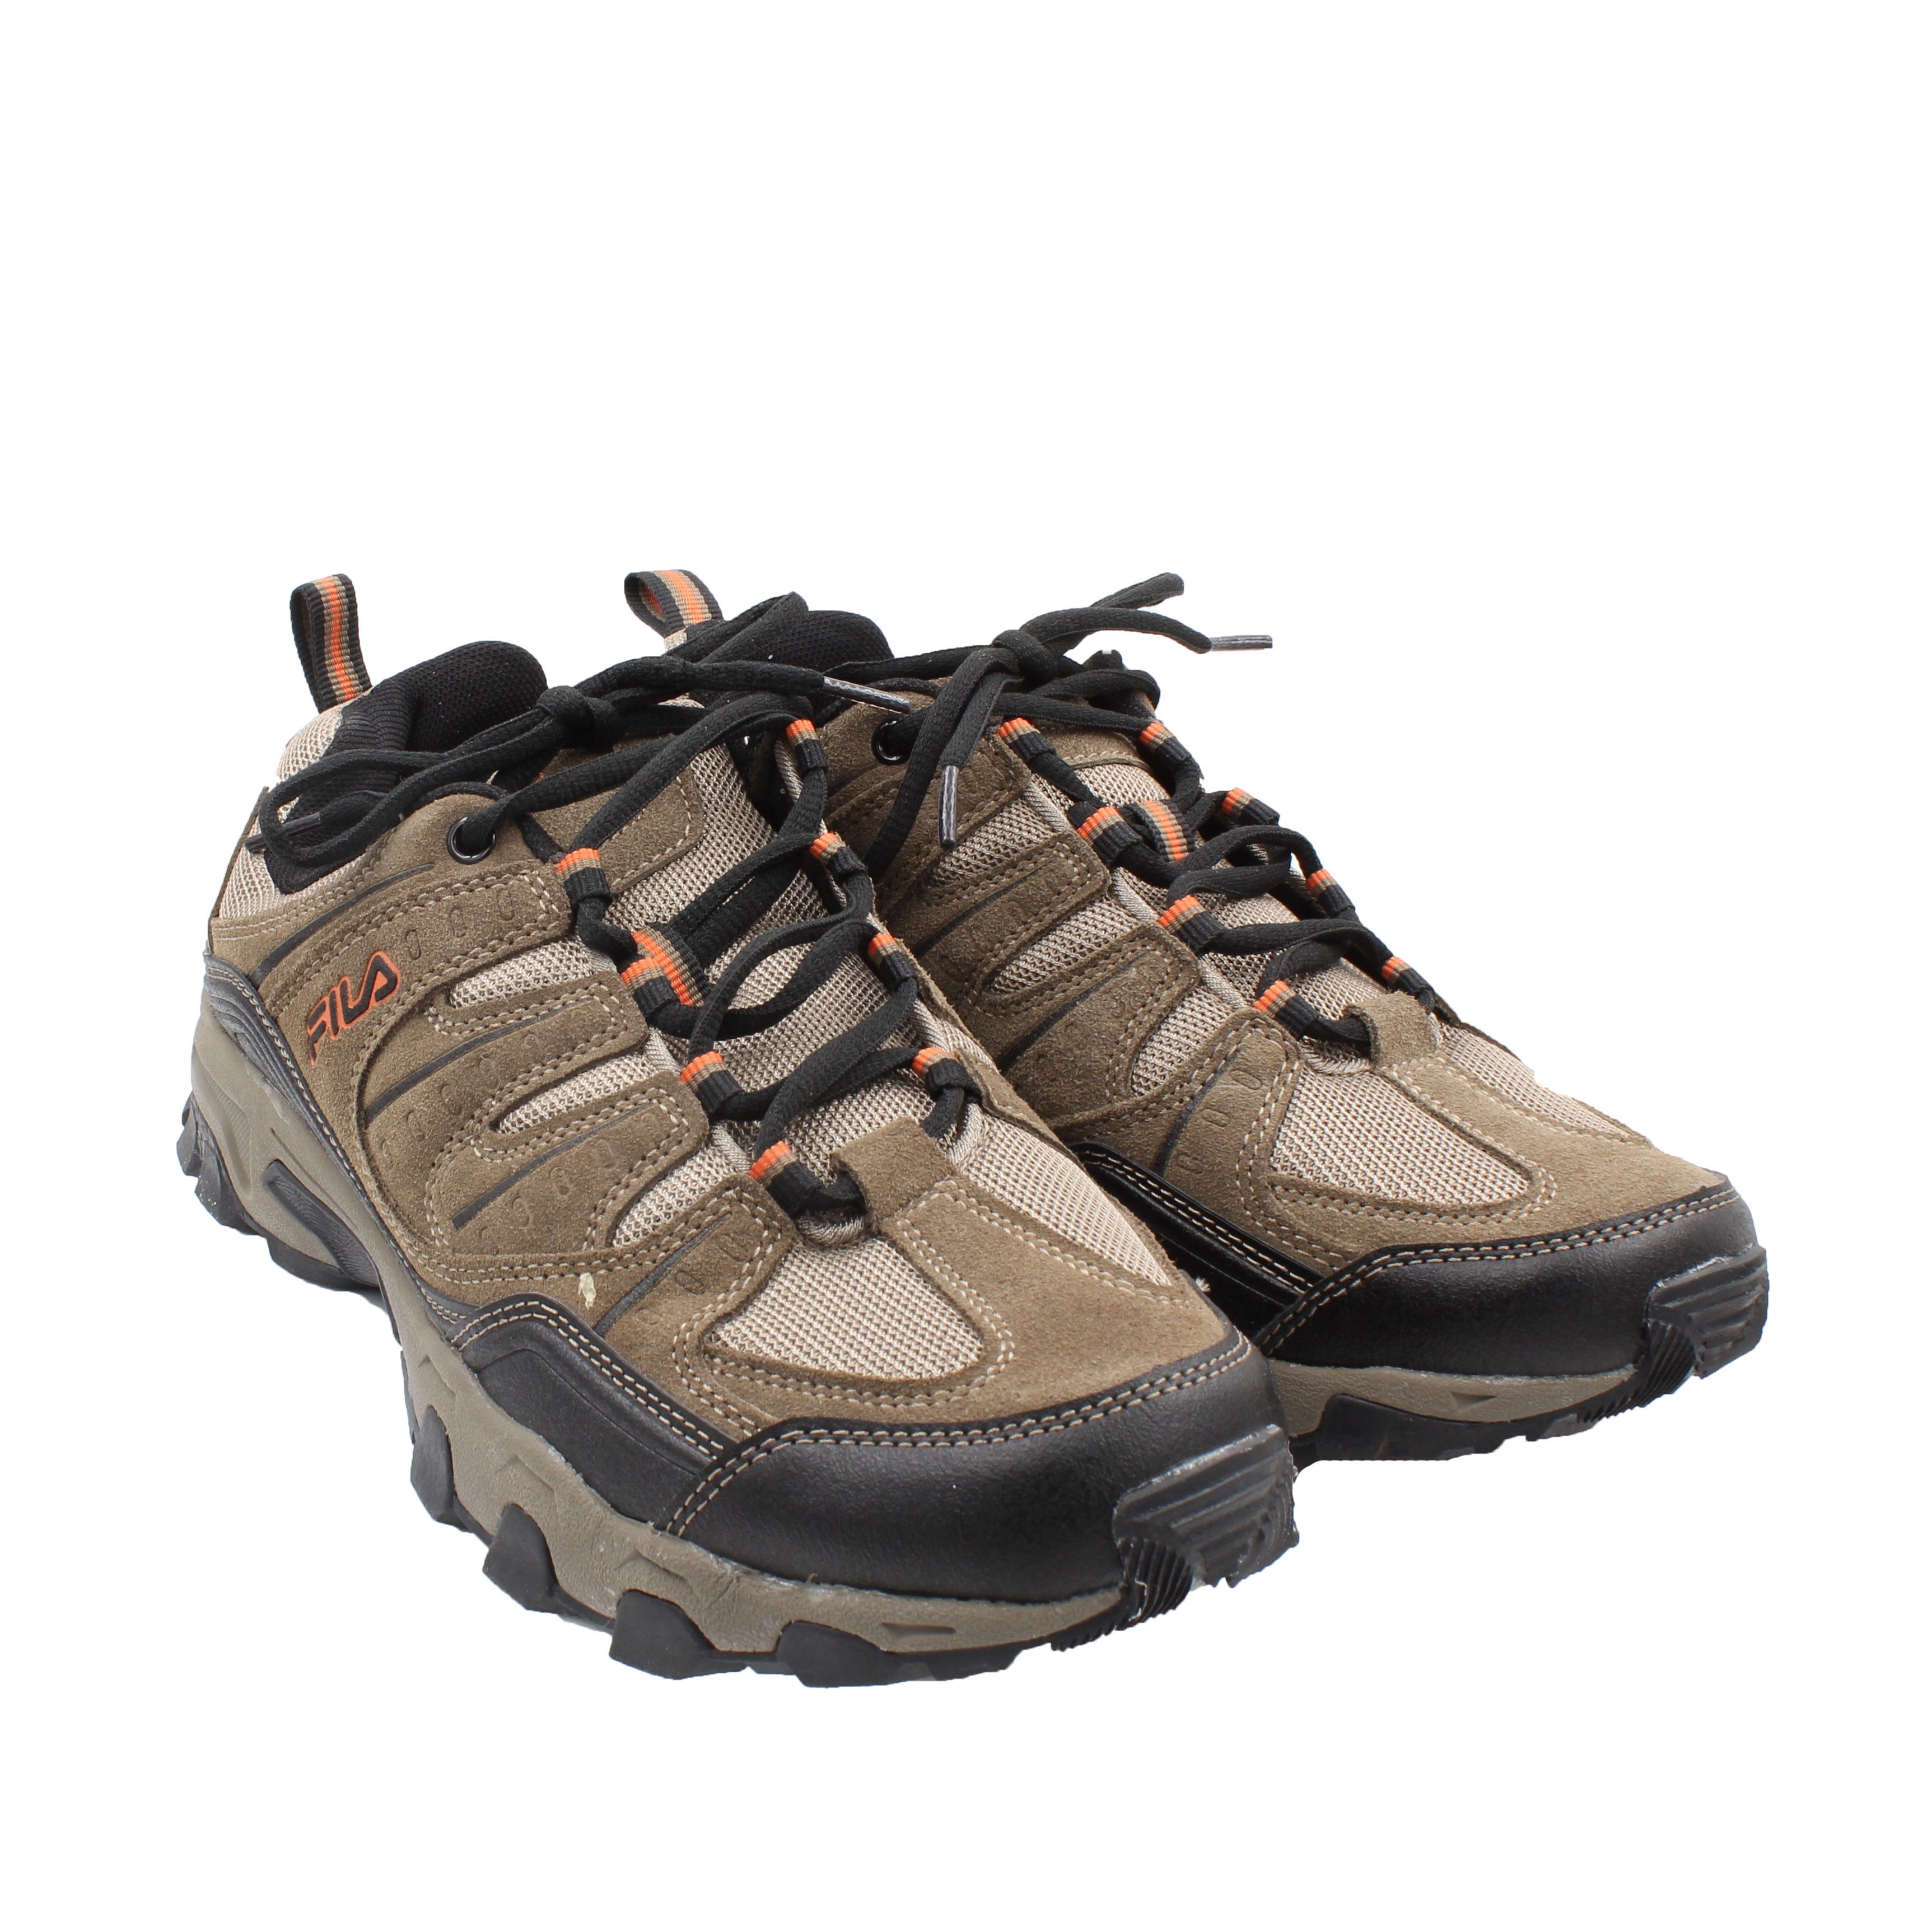 Fila Men's Outdoor Hiking Running Athletic Shoes Size 8.5 Walmart.com